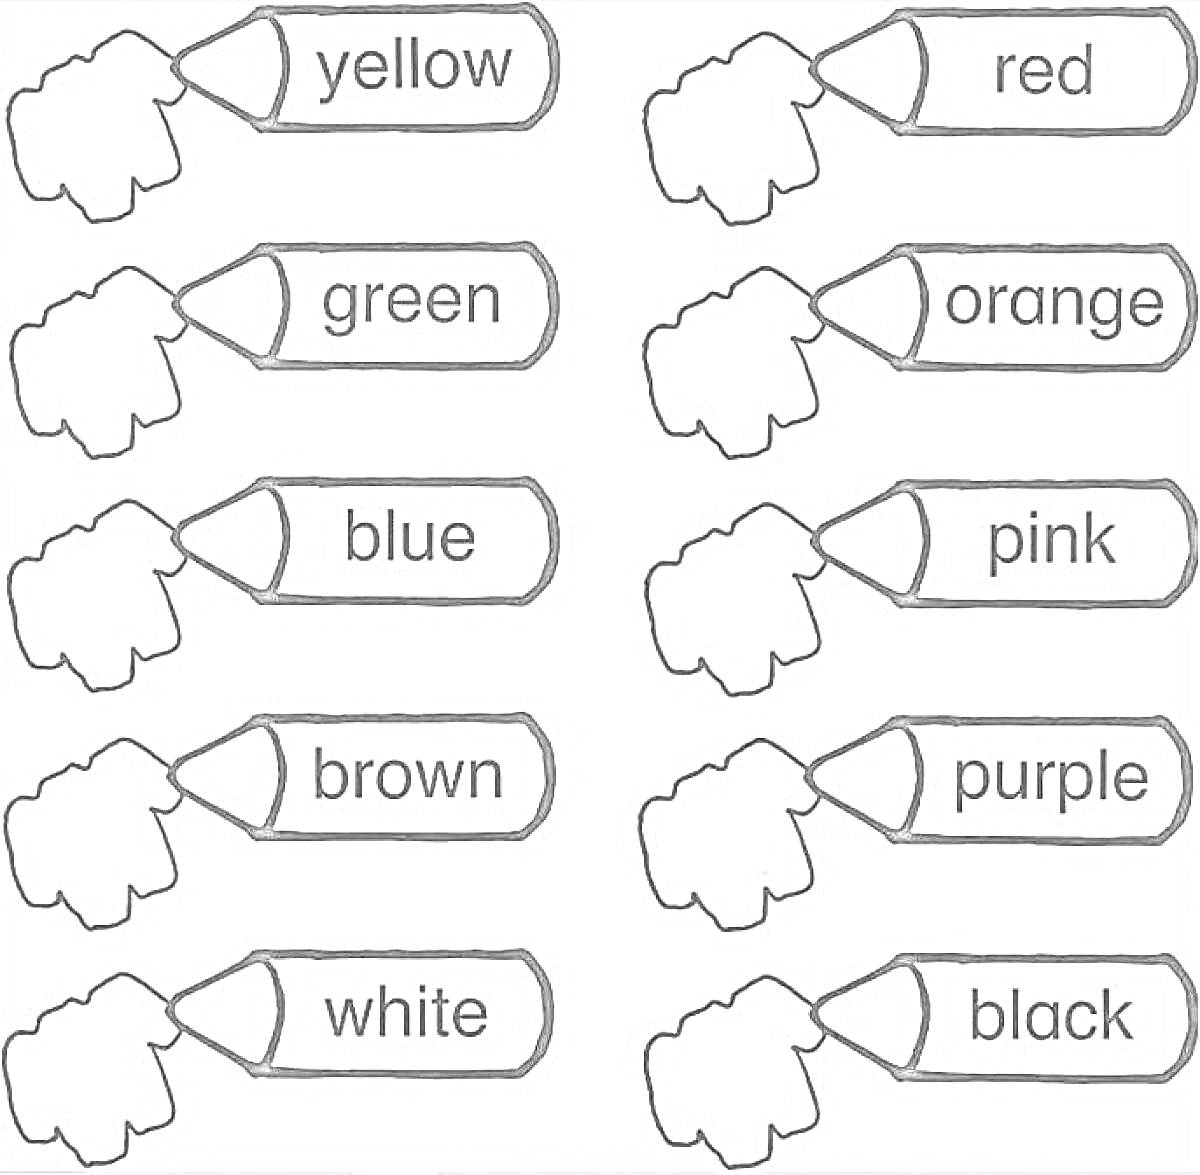 Рисунок с карандашами и названиями цветов на английском языке (yellow, red, green, orange, blue, pink, brown, purple, white, black)